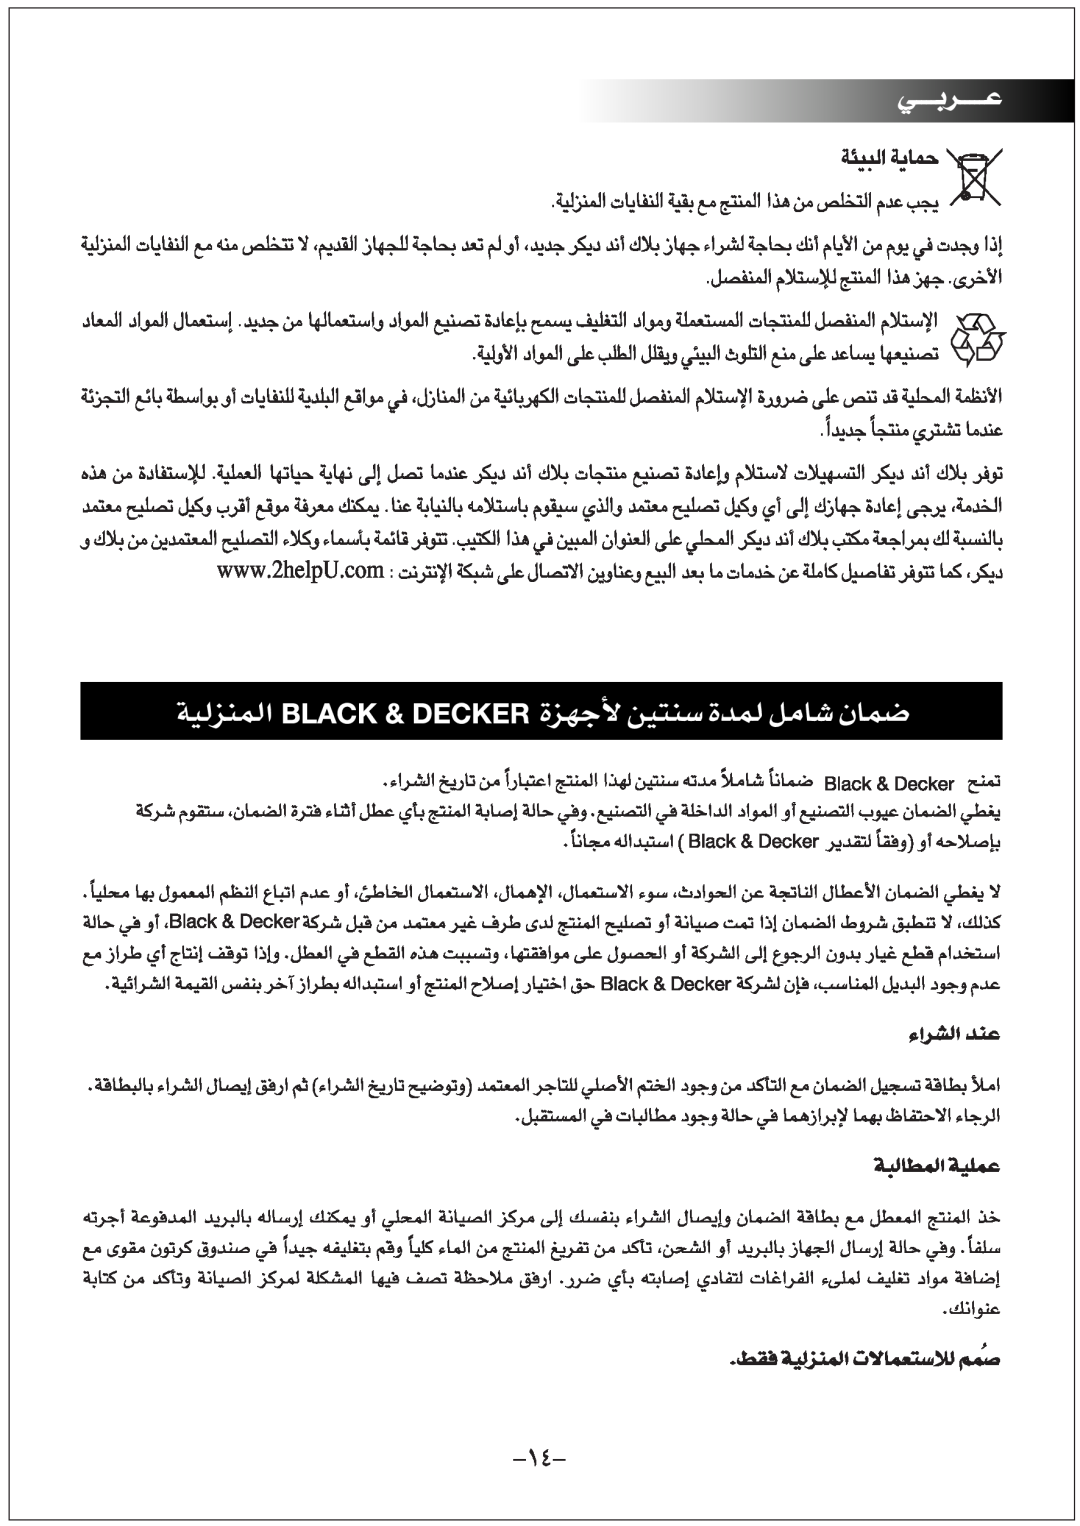 Black & Decker FX1200 manual 